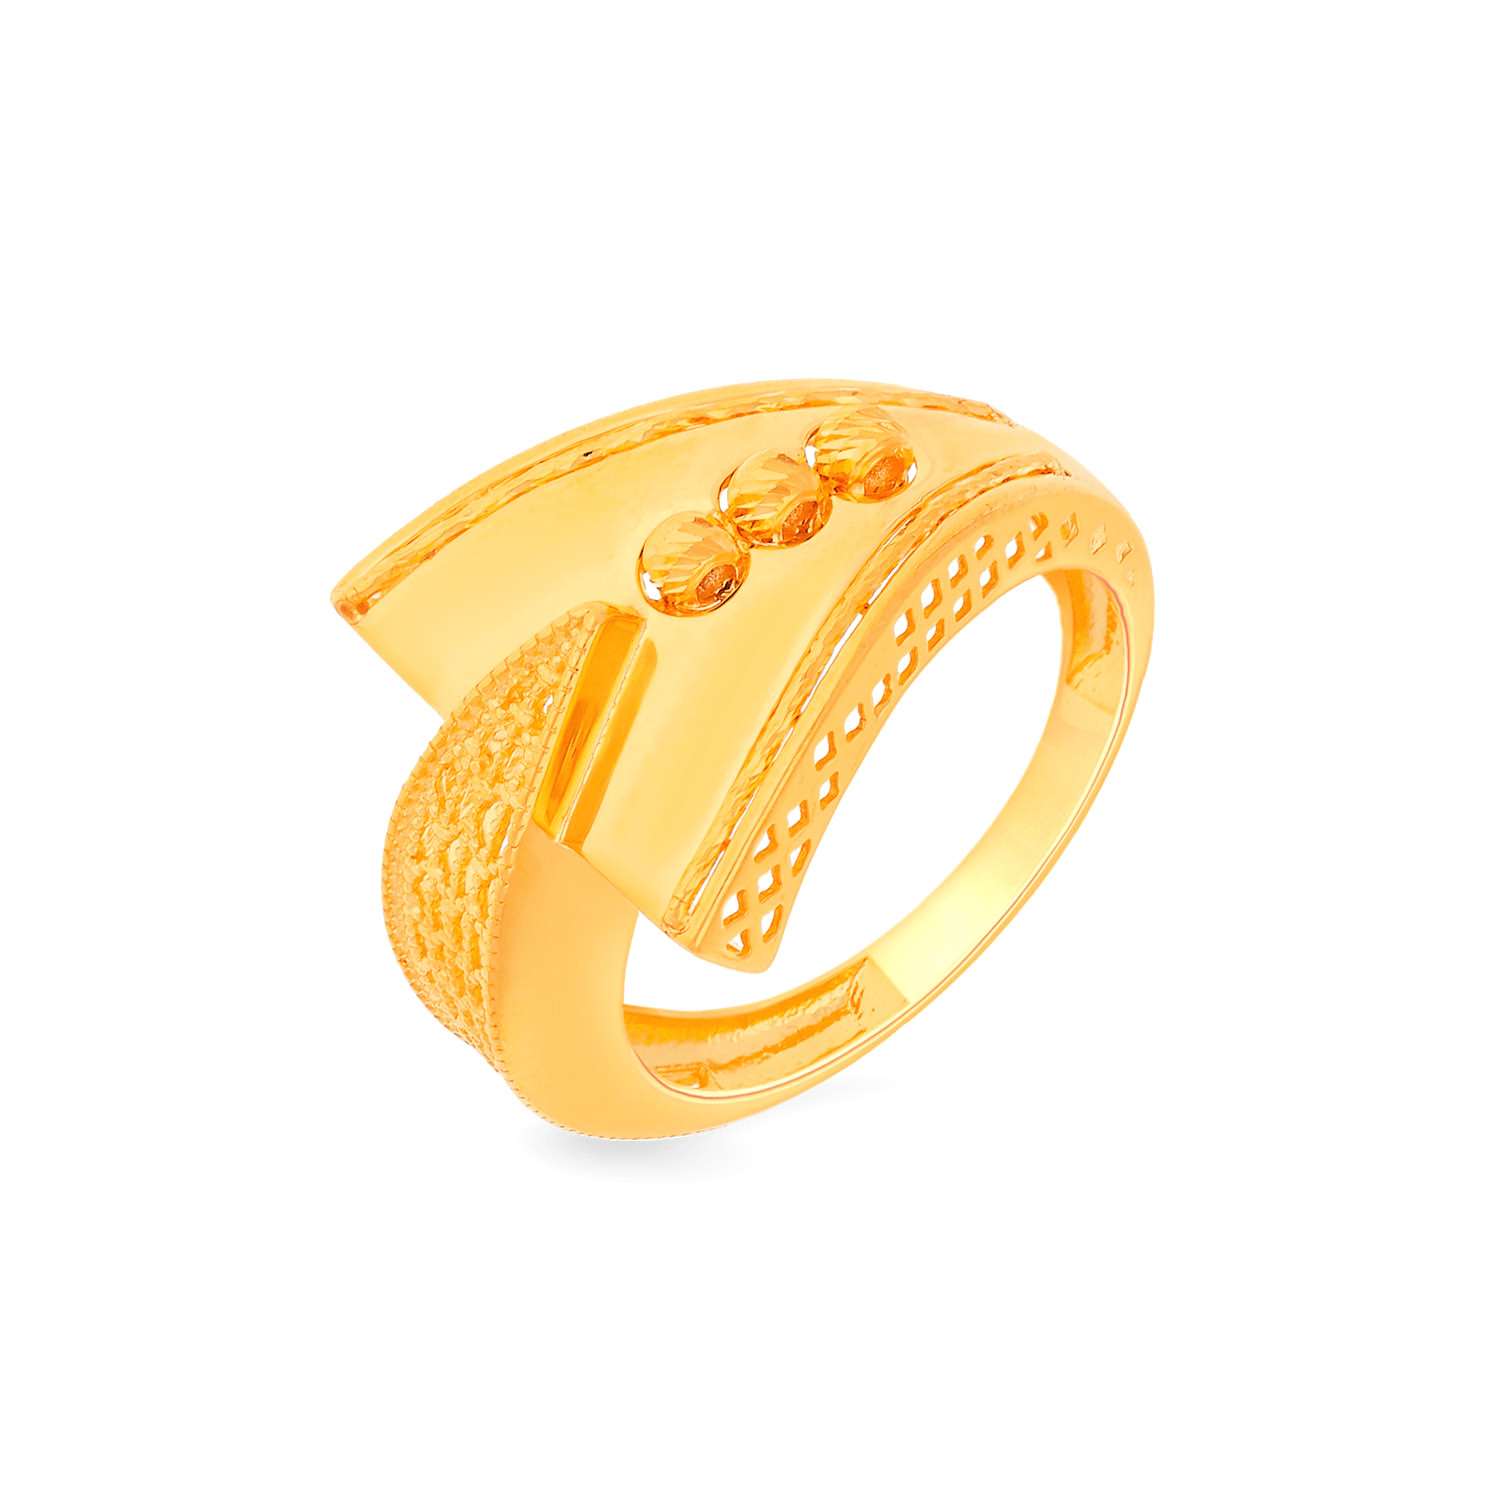 Malabar Gold Ring Designs with Price | Ladies gold rings, Gold ring designs,  Jewelry